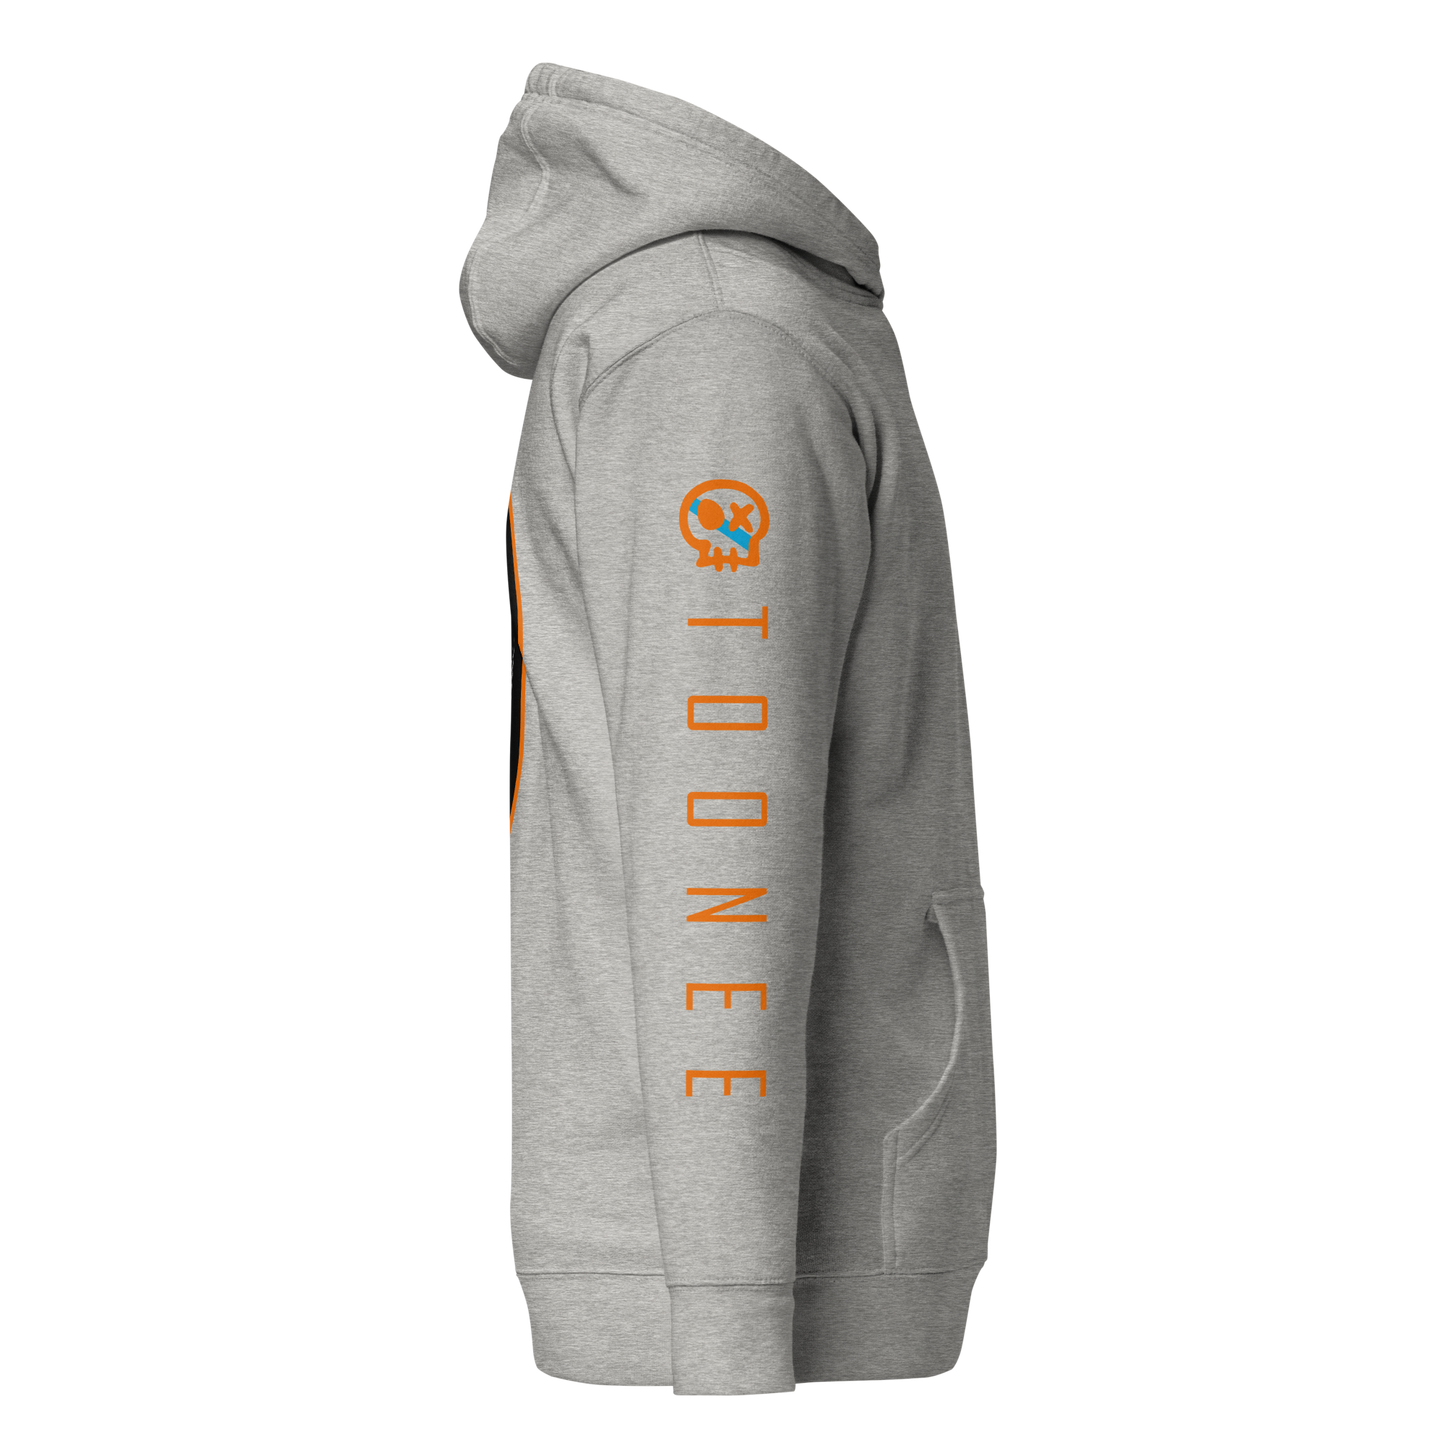 Sweatshirt # TOONEE x COSTA DA MORTE // Premium Hoodie with Hood and Pocket // Unisex